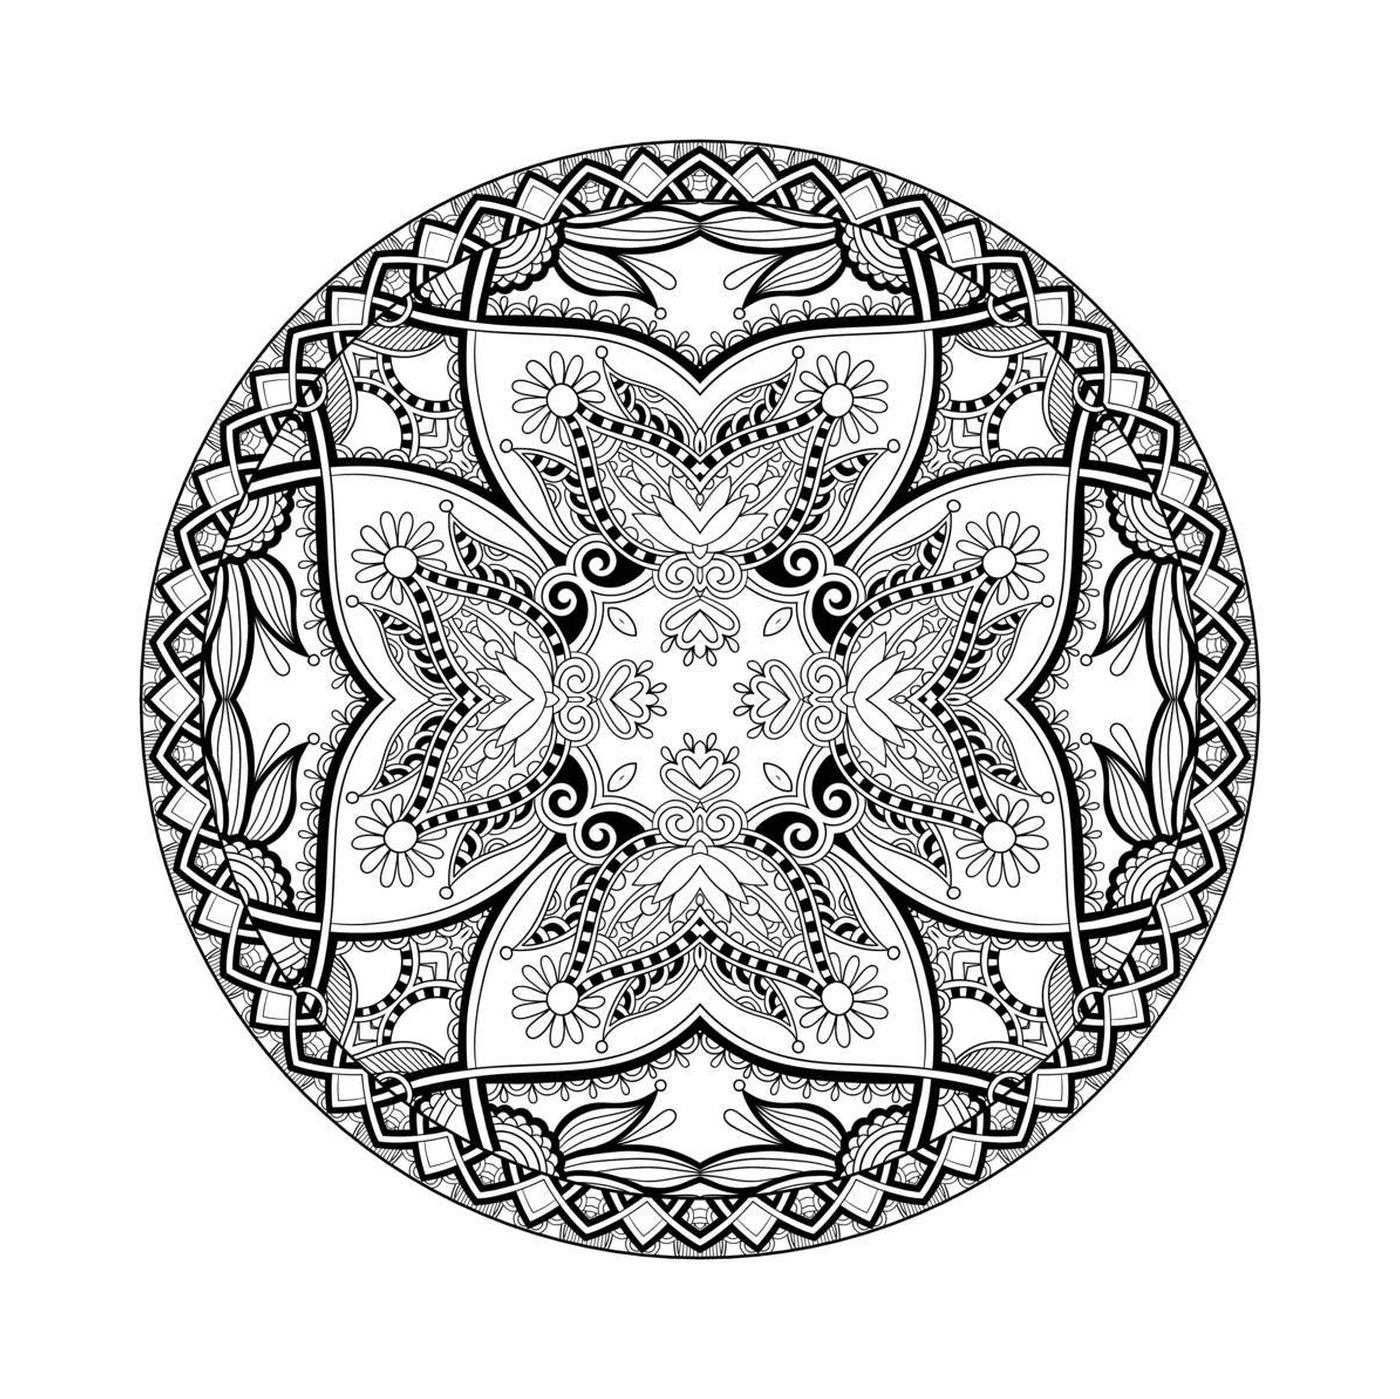  Artistic and complex Mandala 